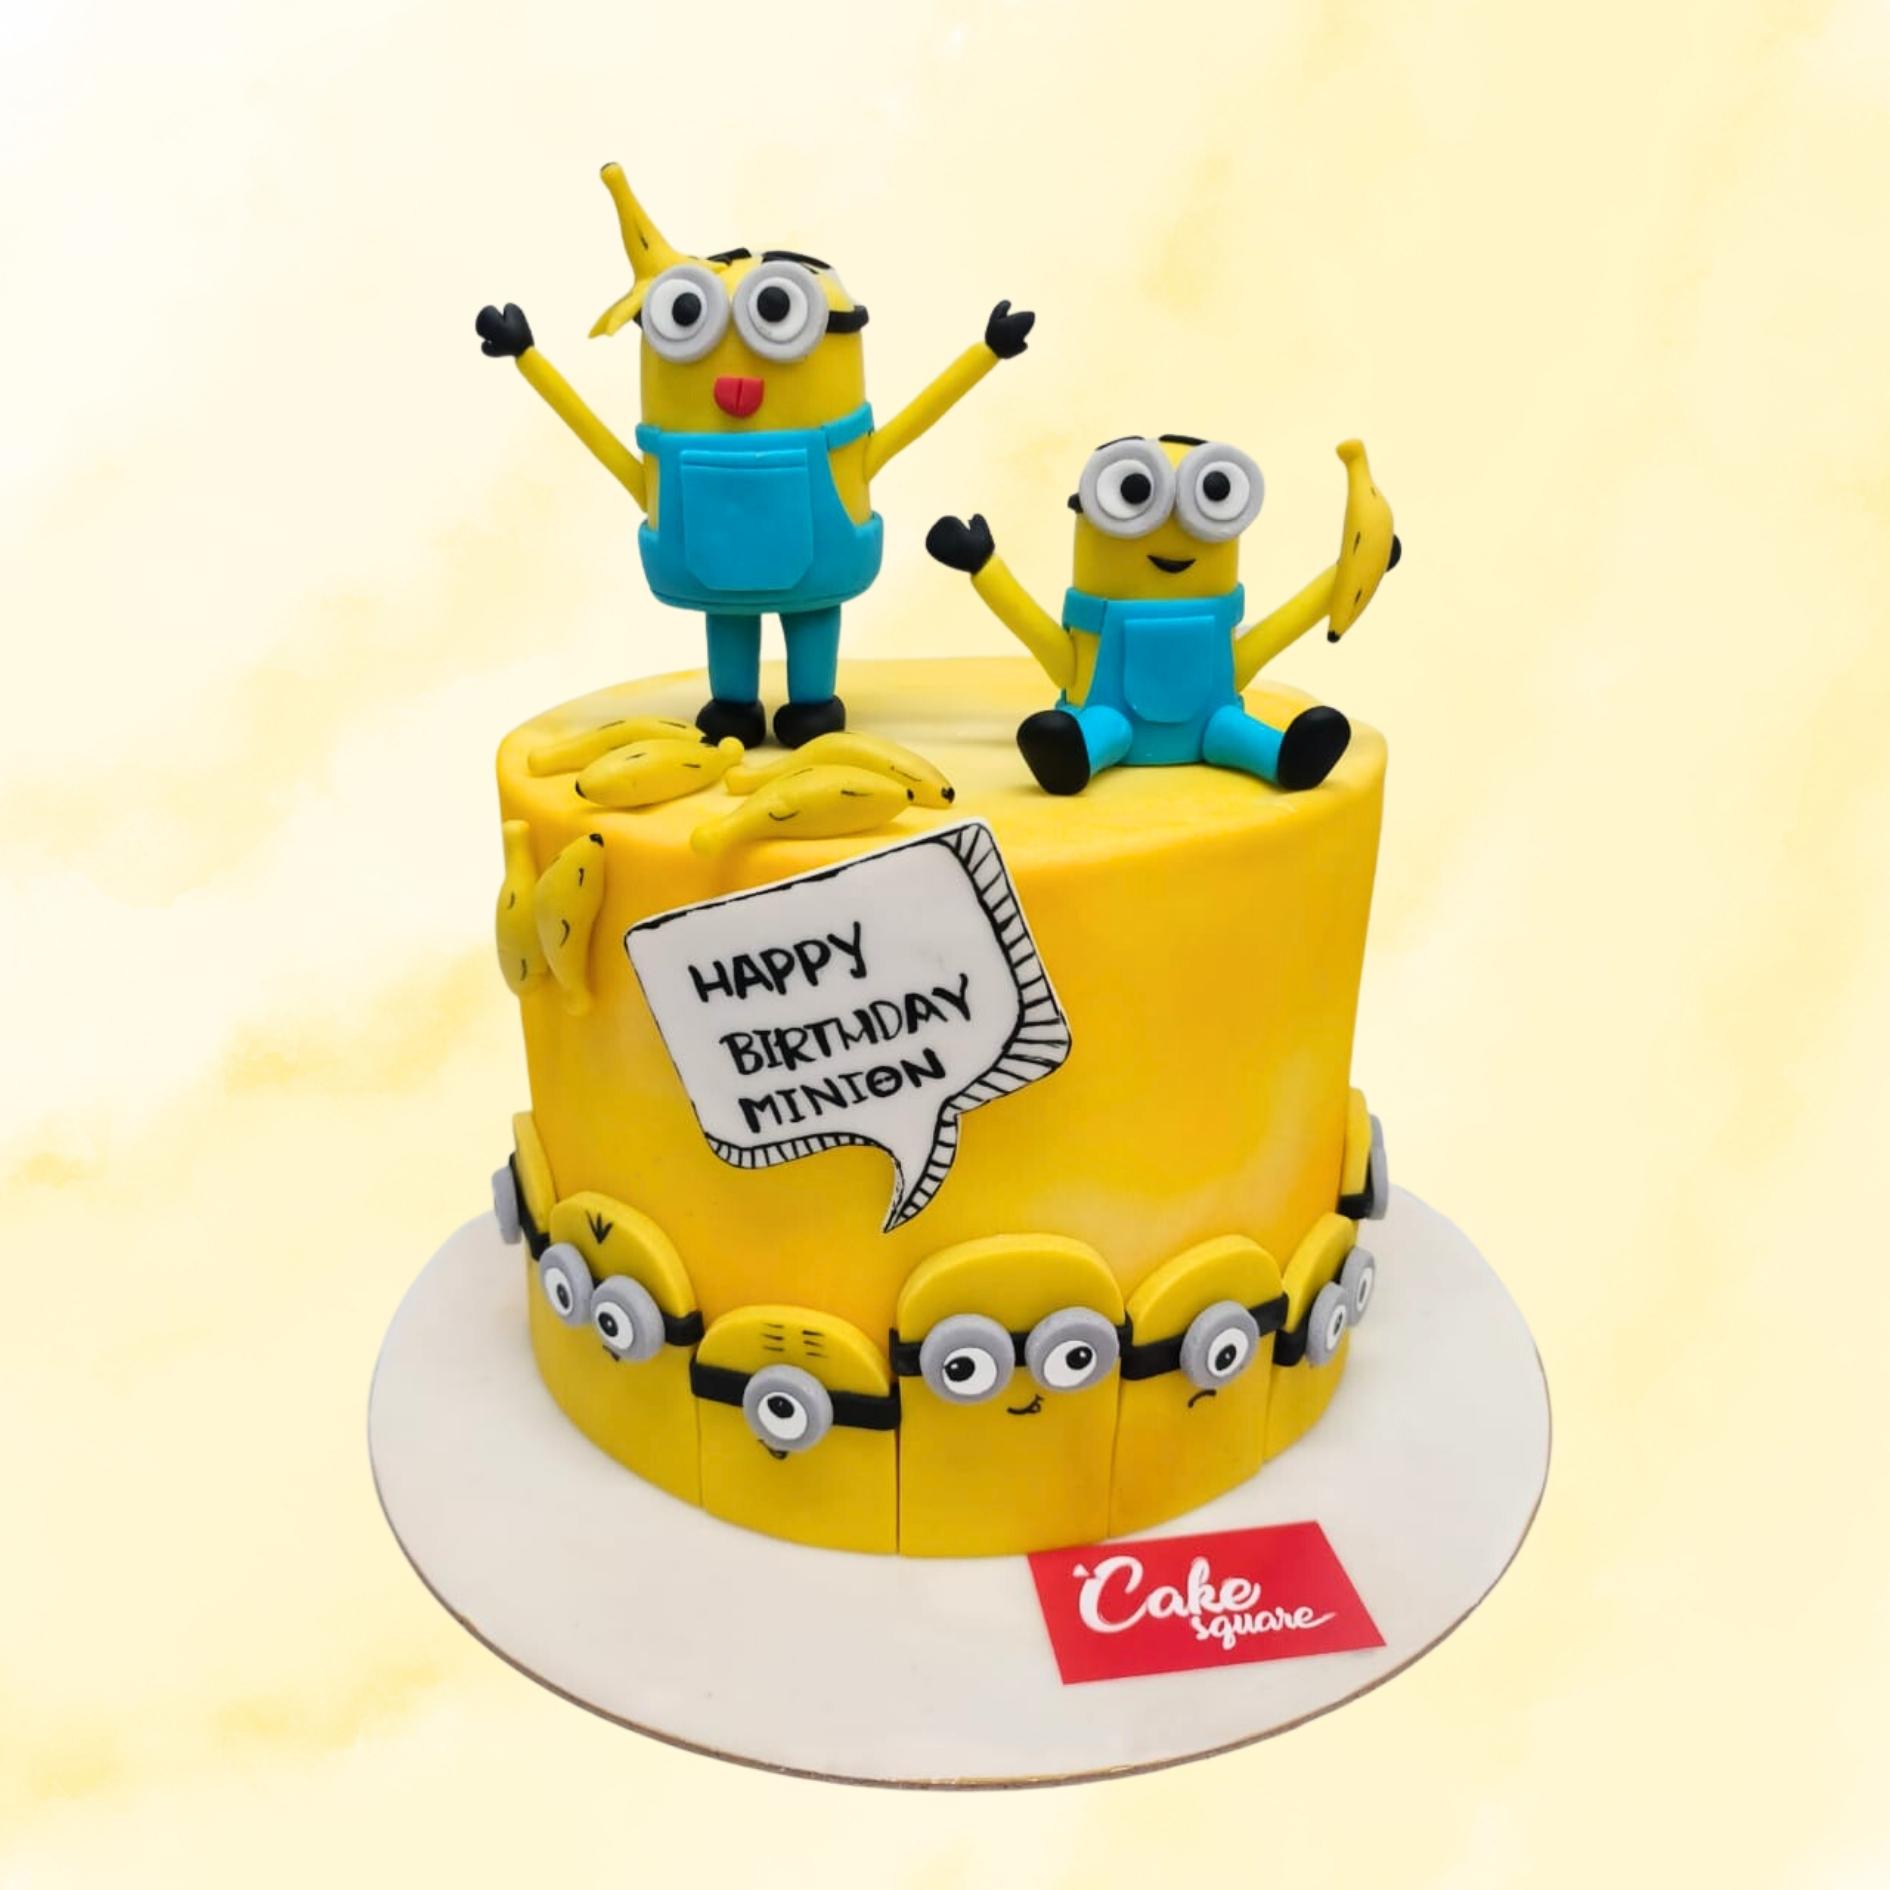 CakeFest - The trending 'PINATA CAKE' with minion theme.... | Facebook